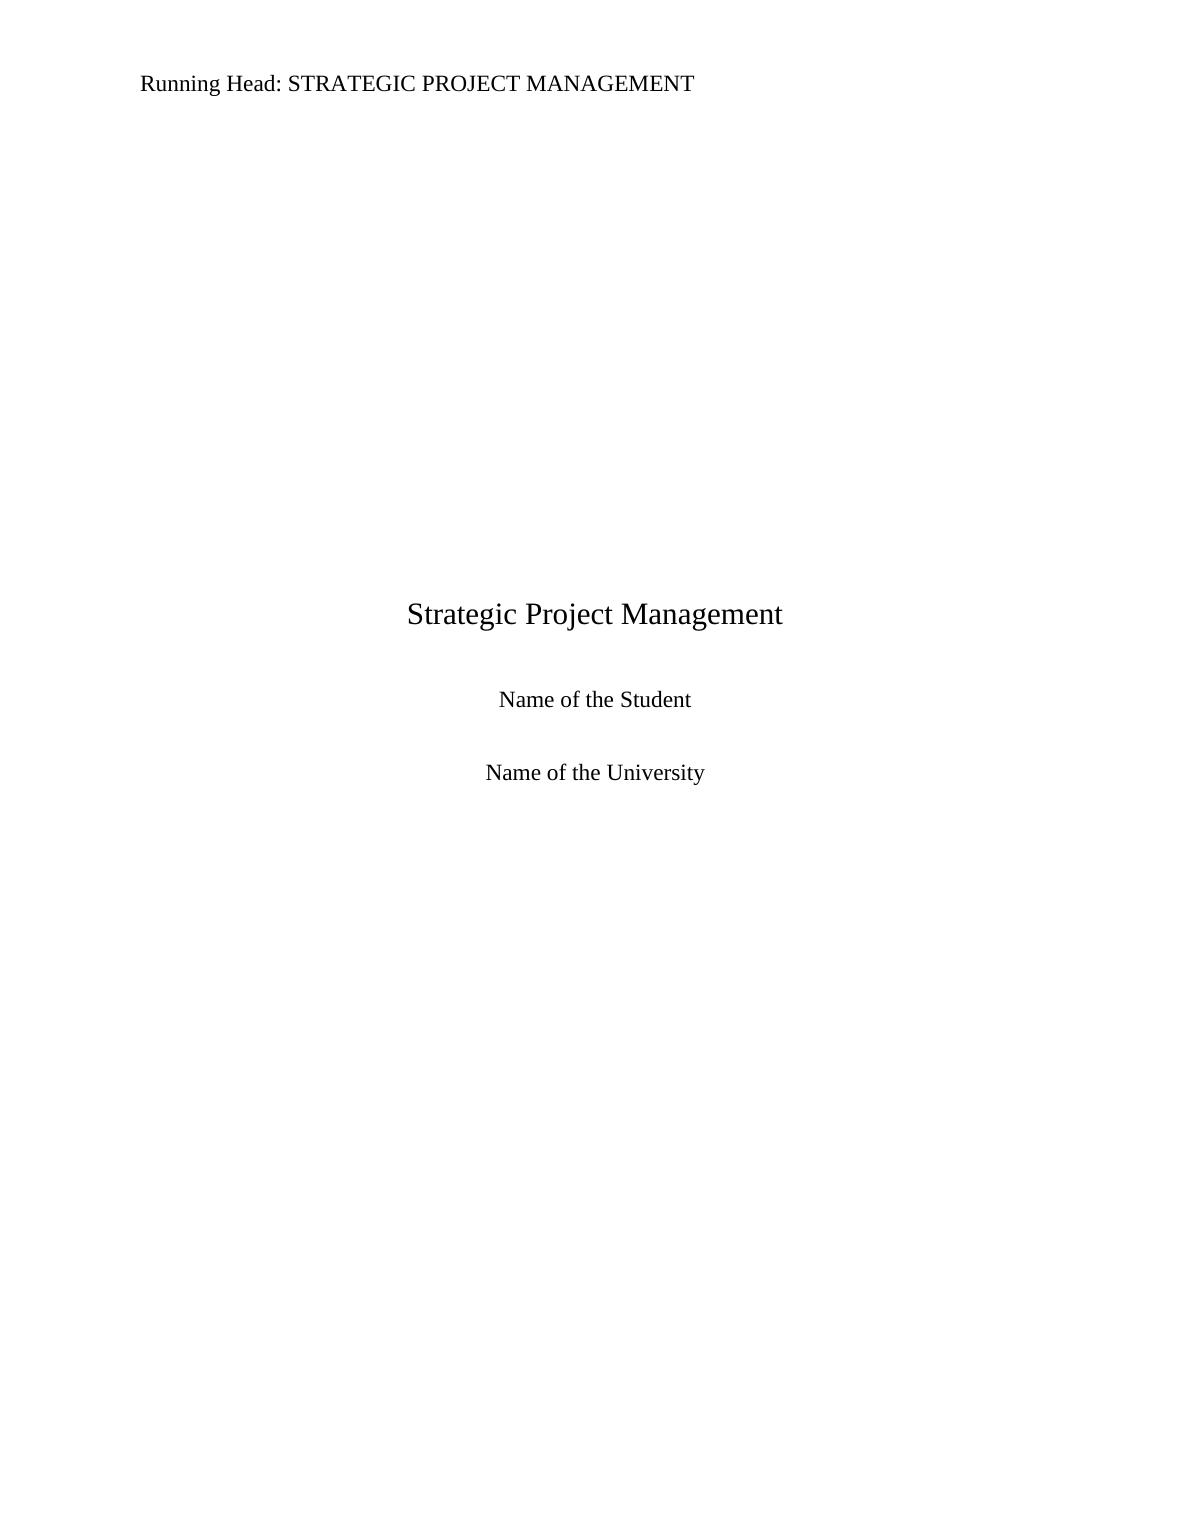 Strategic Project Management_1